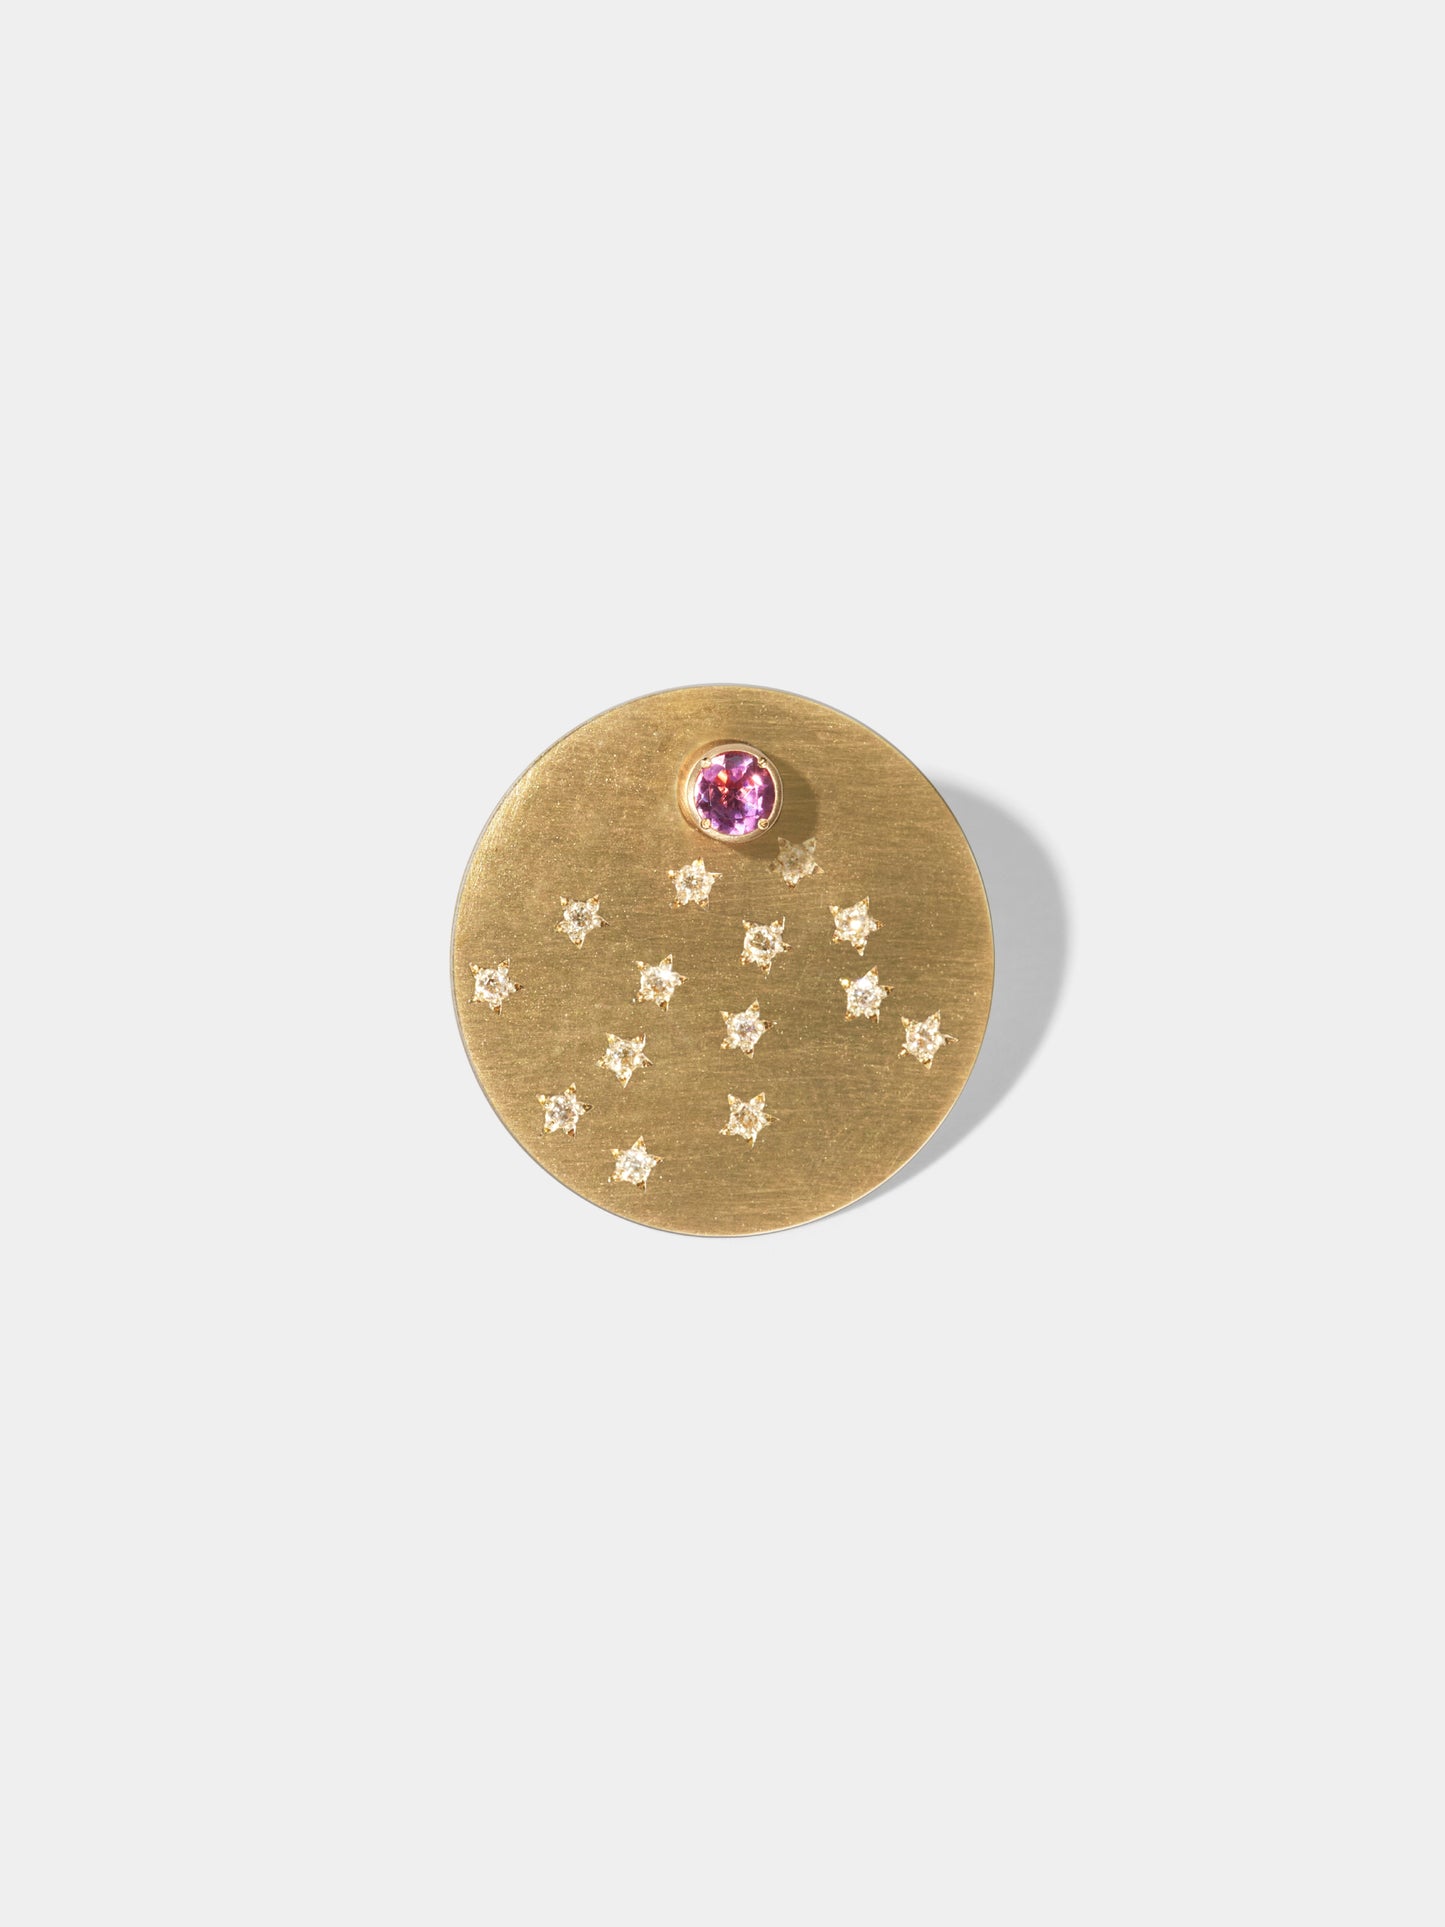 ASTERISM_Pierced Earring_Aquarius(水瓶座) / Pink Tourmaline